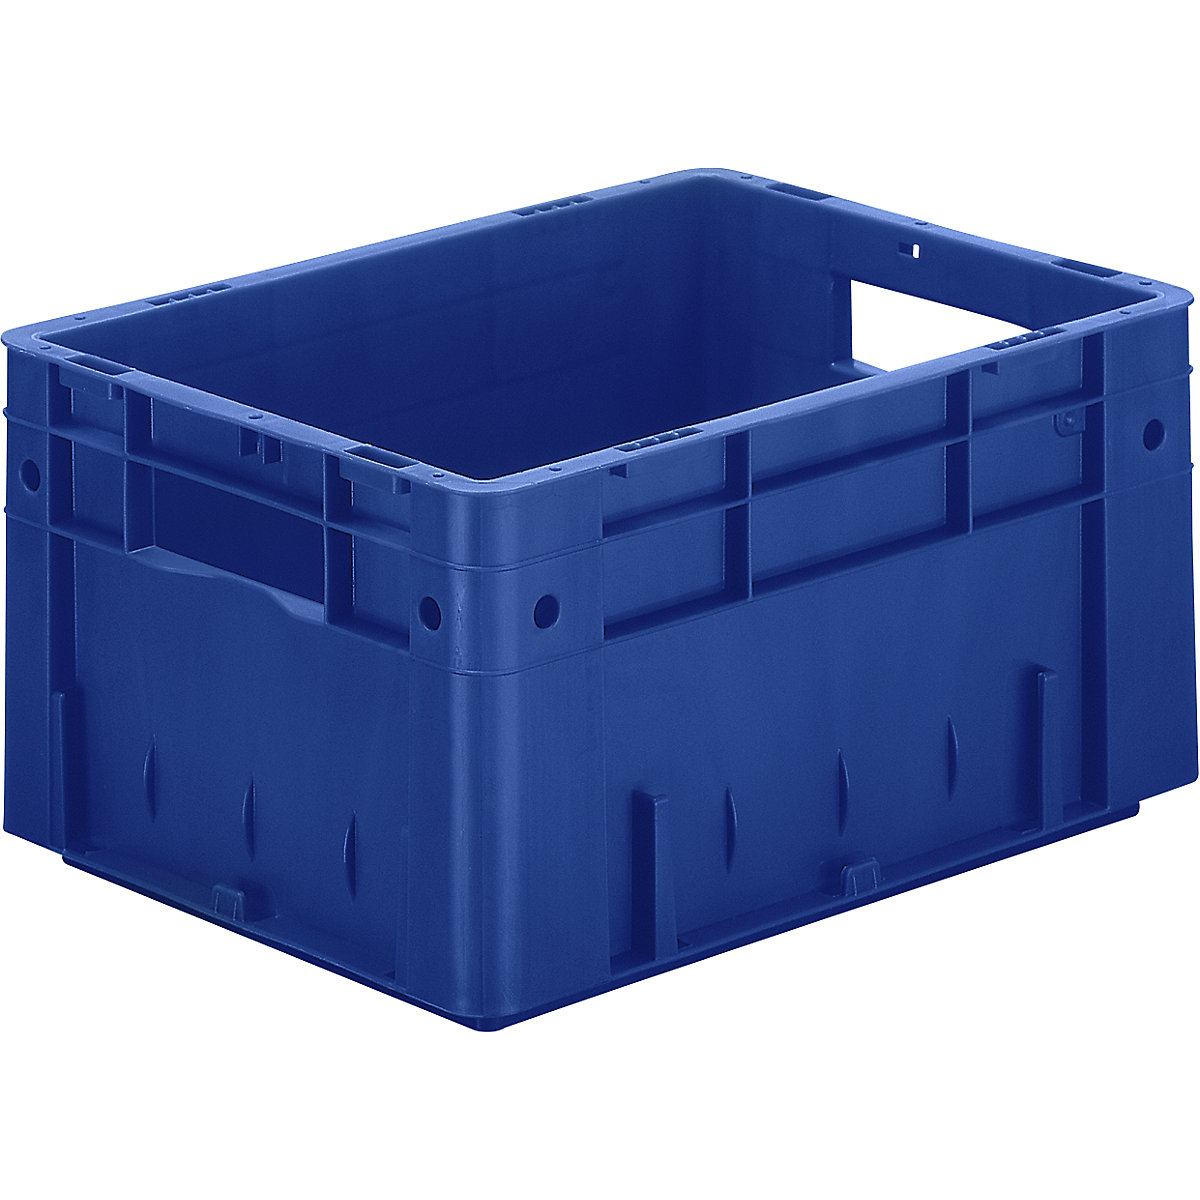 Schwerlast-Euro-Behälter, Polypropylen, Volumen 17,5 l, LxBxH 400 x 300 x 210 mm, Wände geschlossen, Boden geschlossen, blau, VE 4 Stk-3